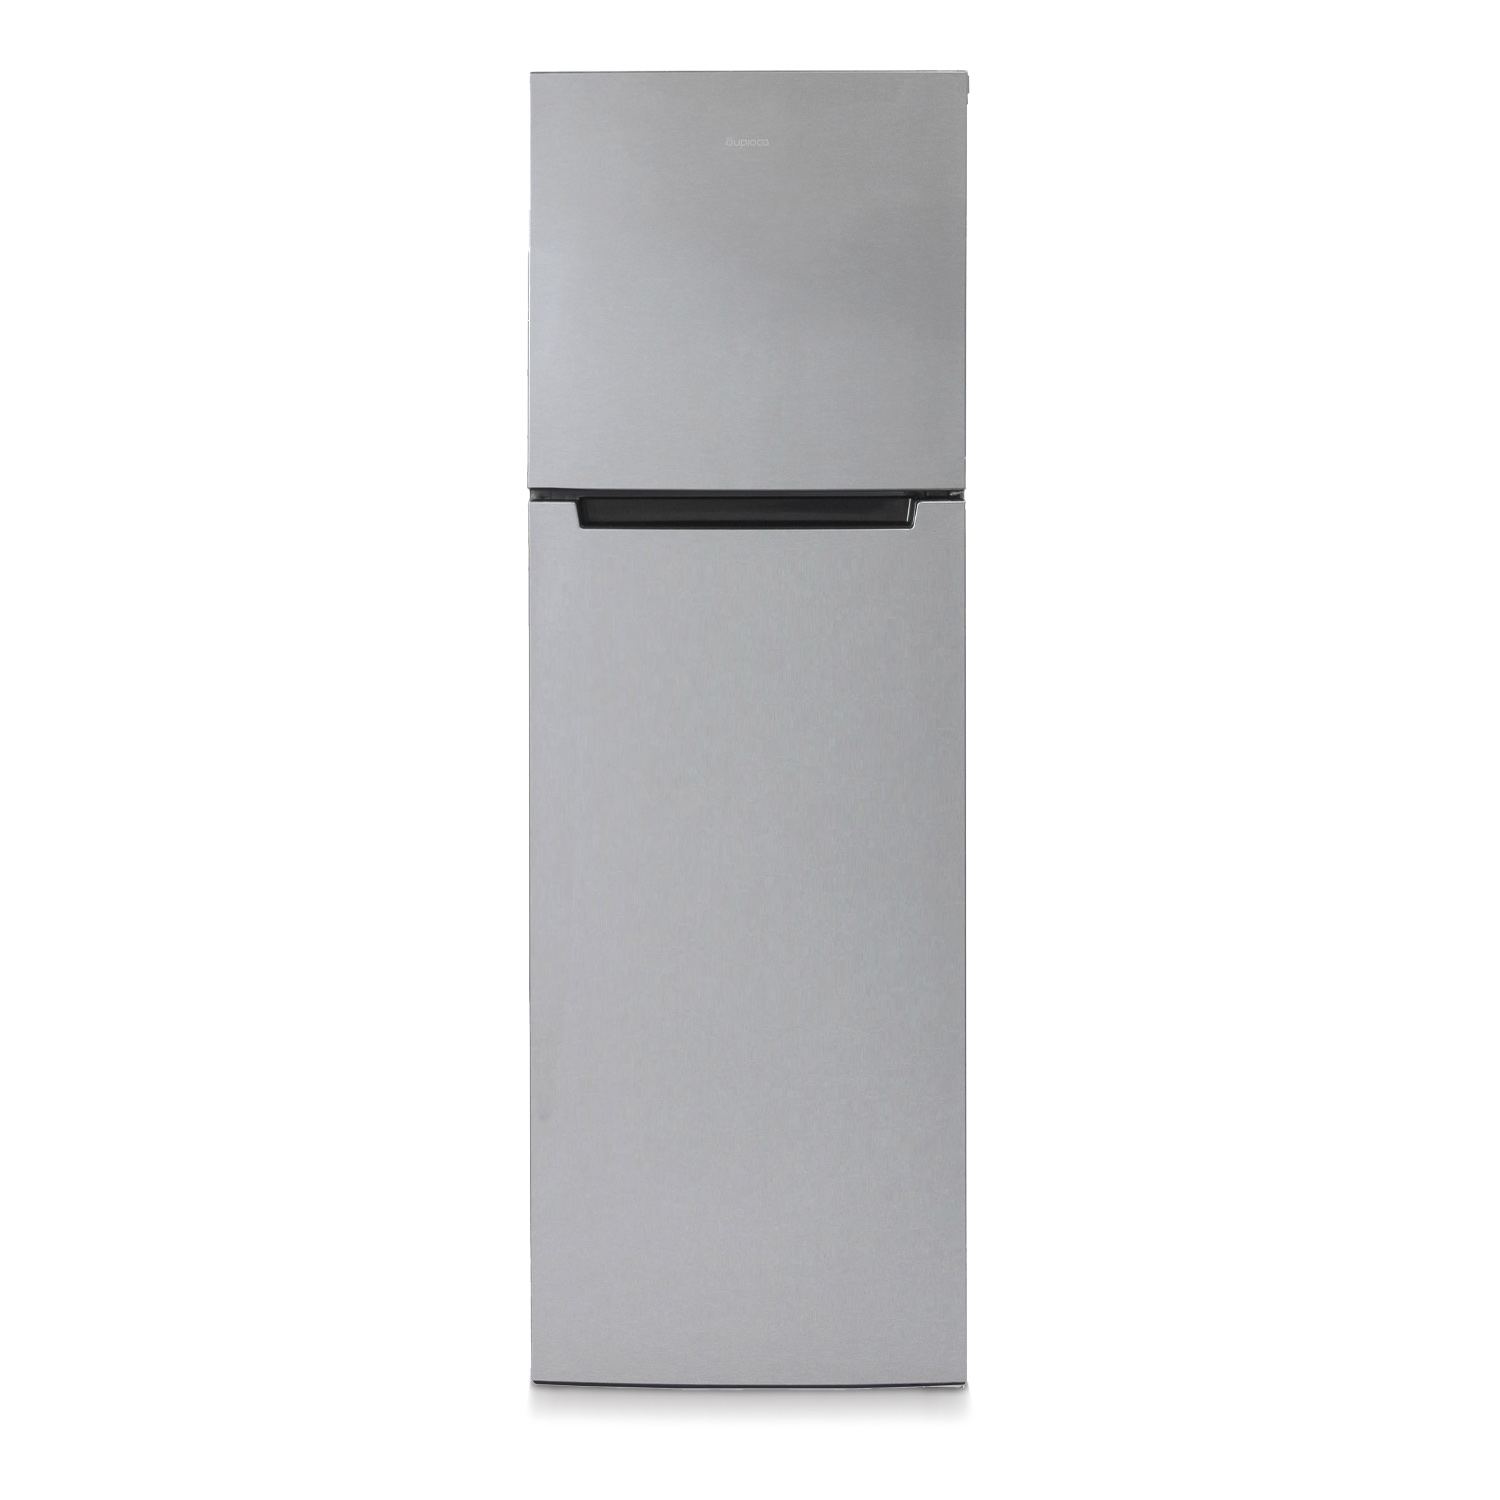 Холодильник Бирюса C6039 серебристый холодильник бирюса m109 серебристый